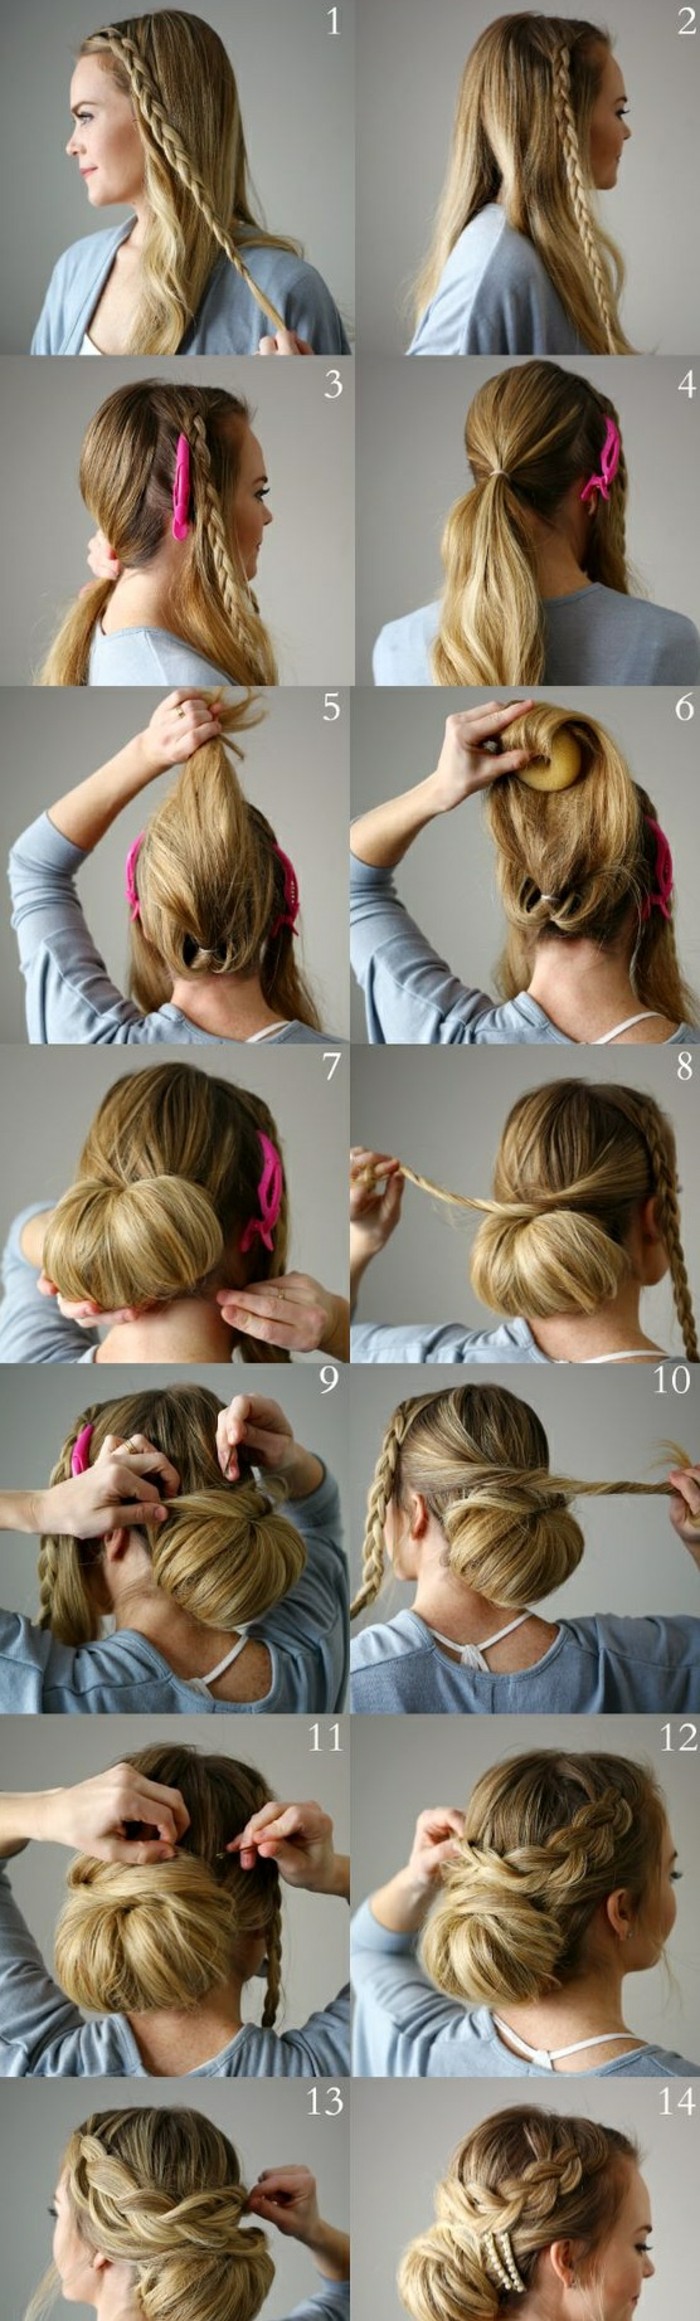 updo hairstyles-εγχειρίδιο-γκρι-μπλούζα-μακρύ-ξανθά μαλλιά-pin up-πλεξίδα-tie-diy-χτένισμα